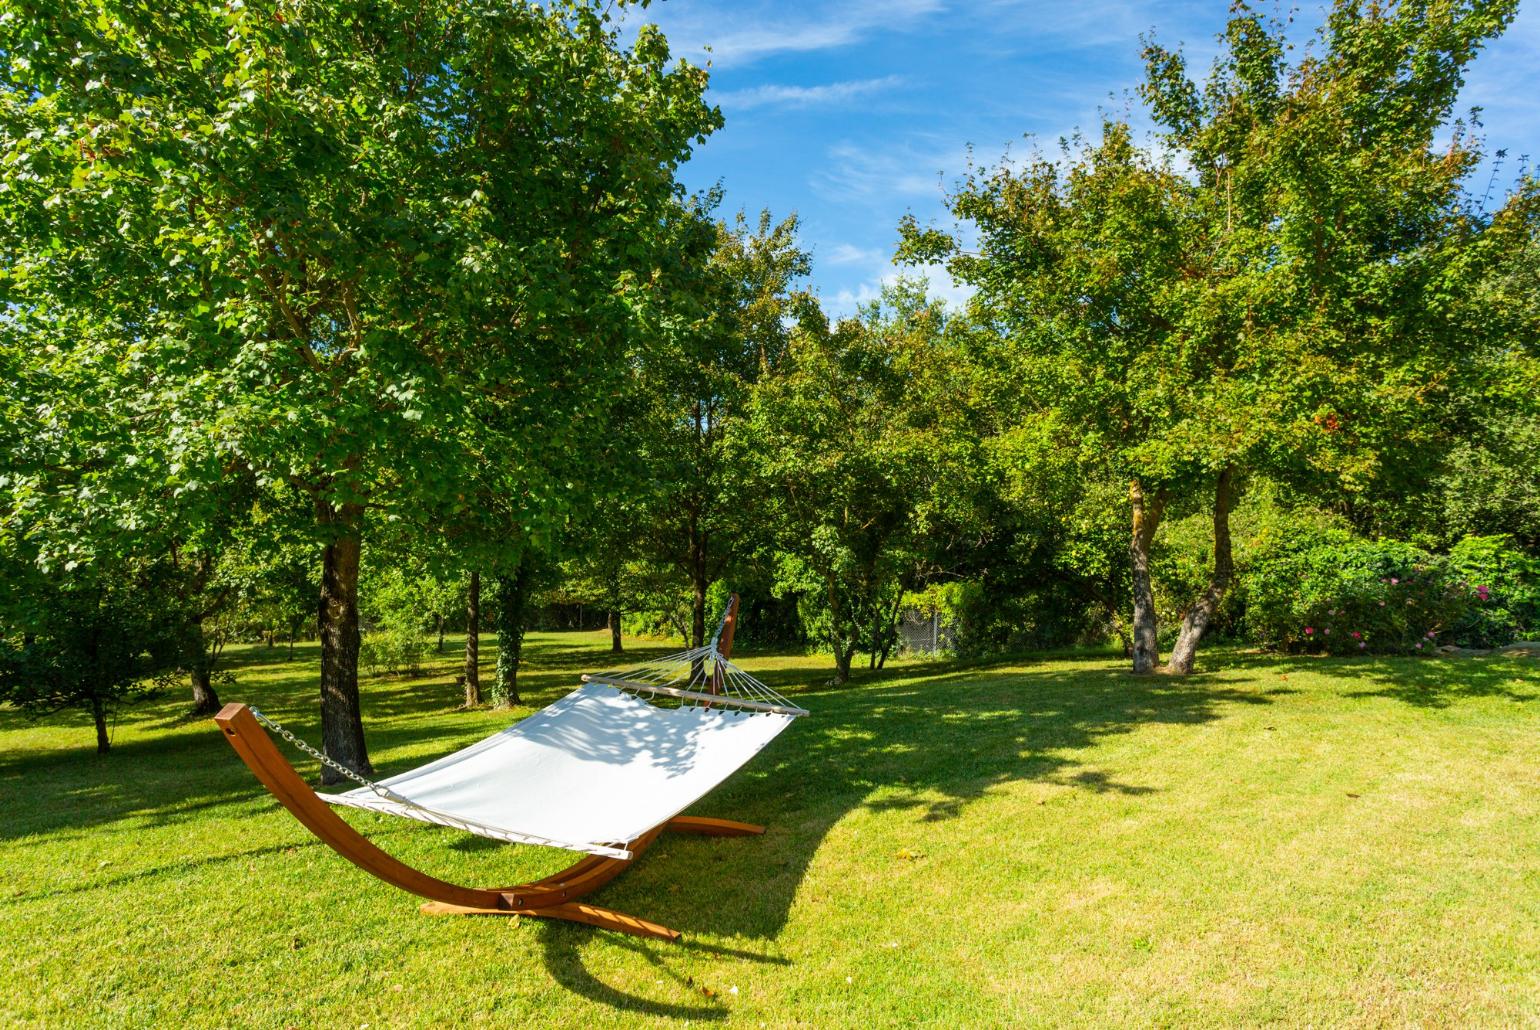 Garden area with hammock